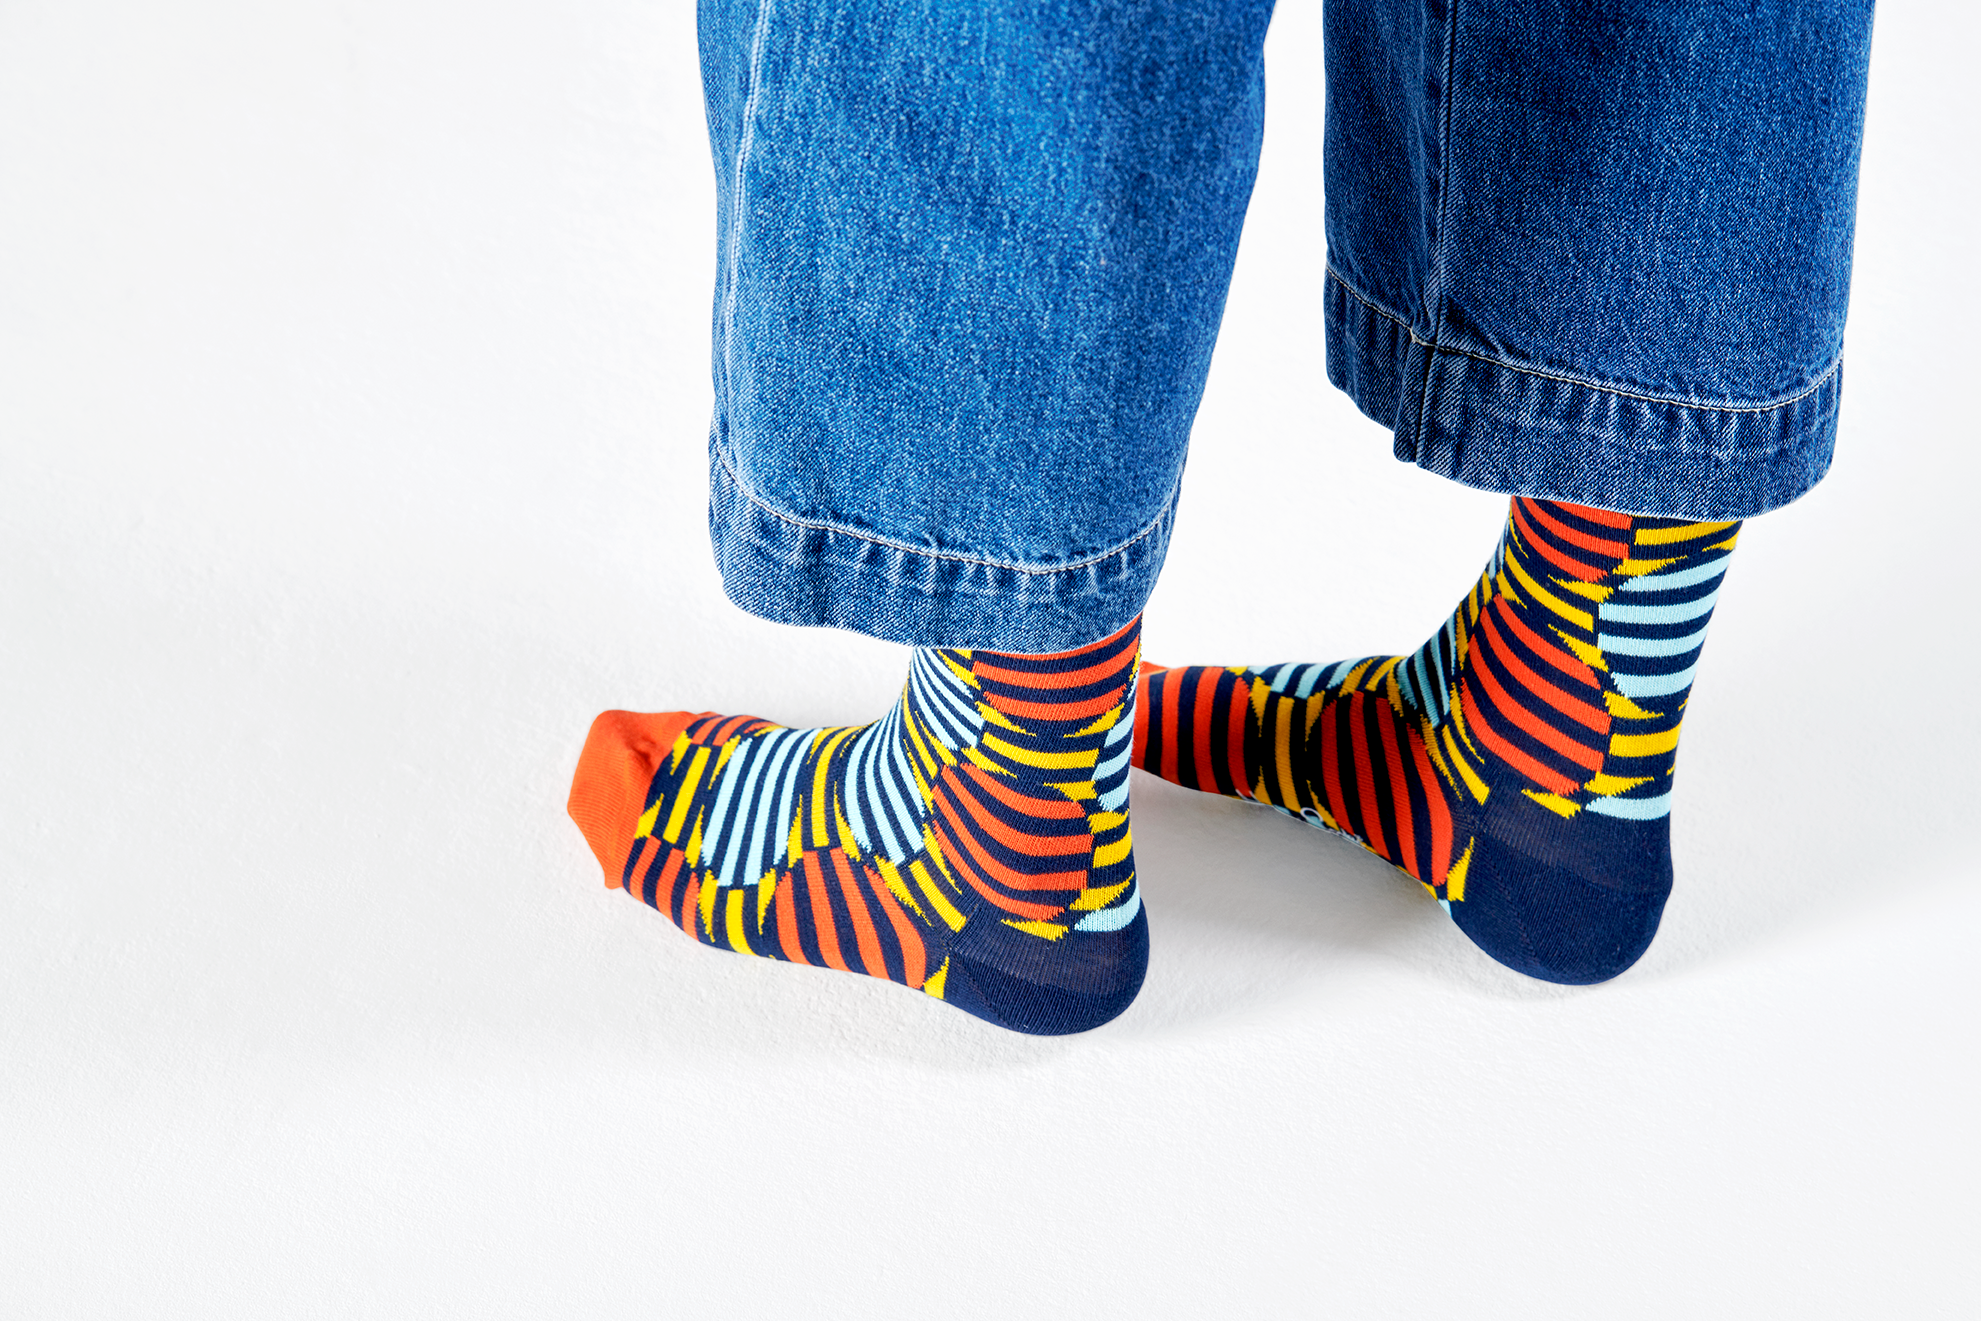 Modro-oranžové ponožky Happy Socks s barevným vzorem Optic Dot